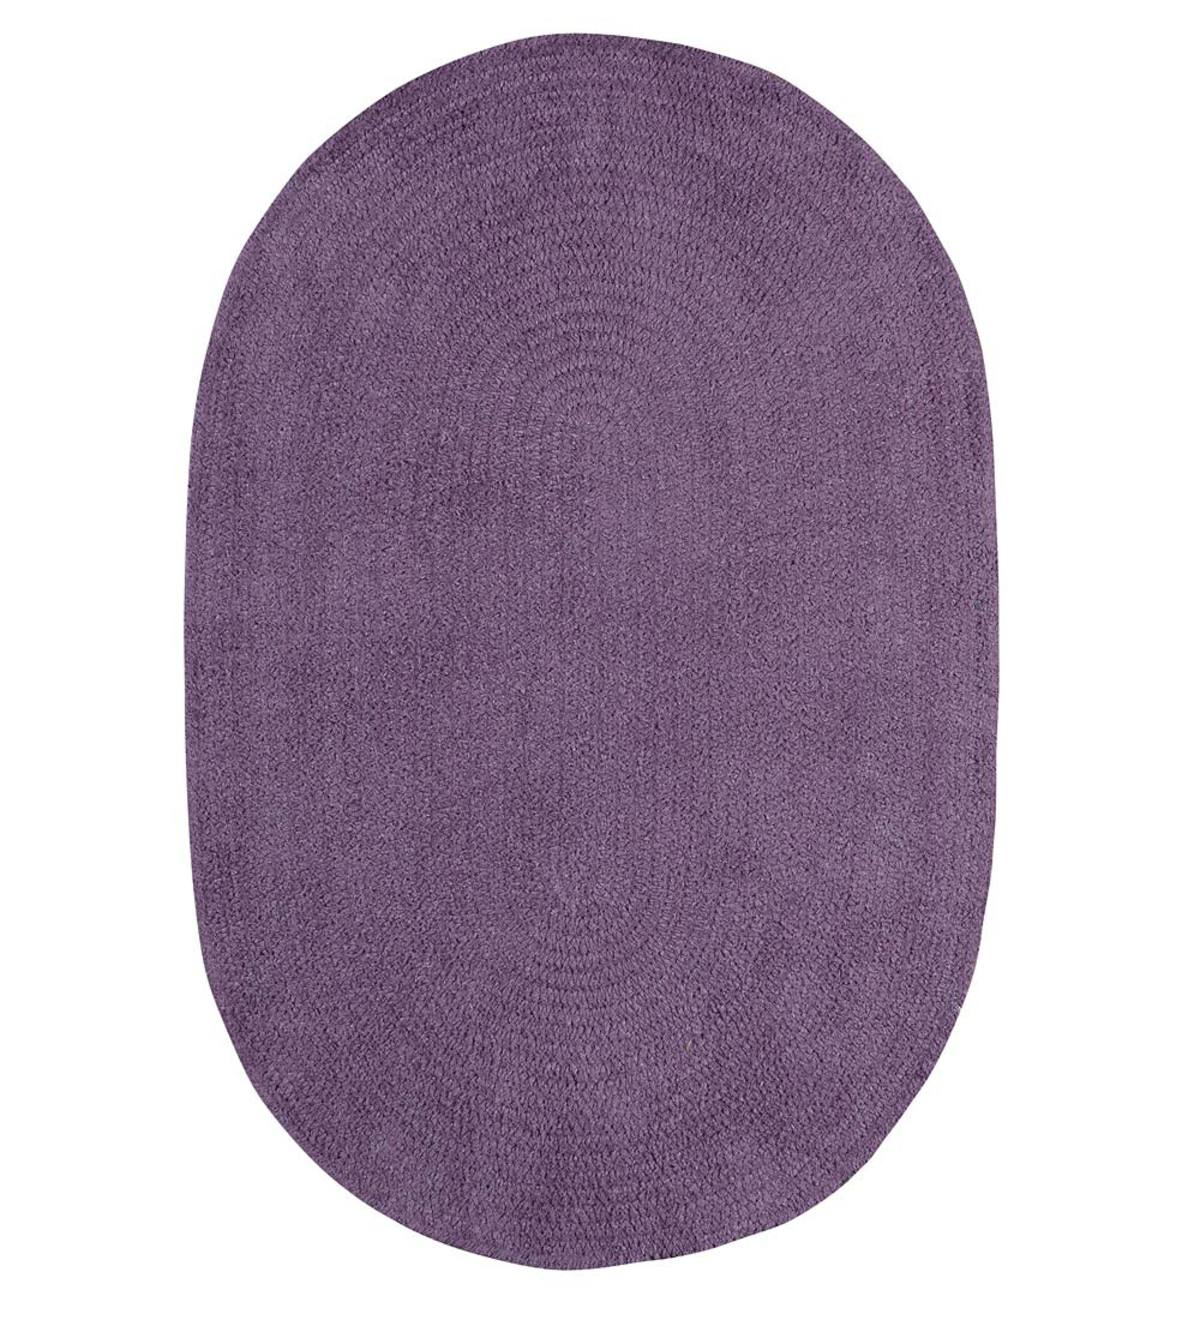 Chenille Oval Braided Area Rug, 7' x 9' - Wistful Purple